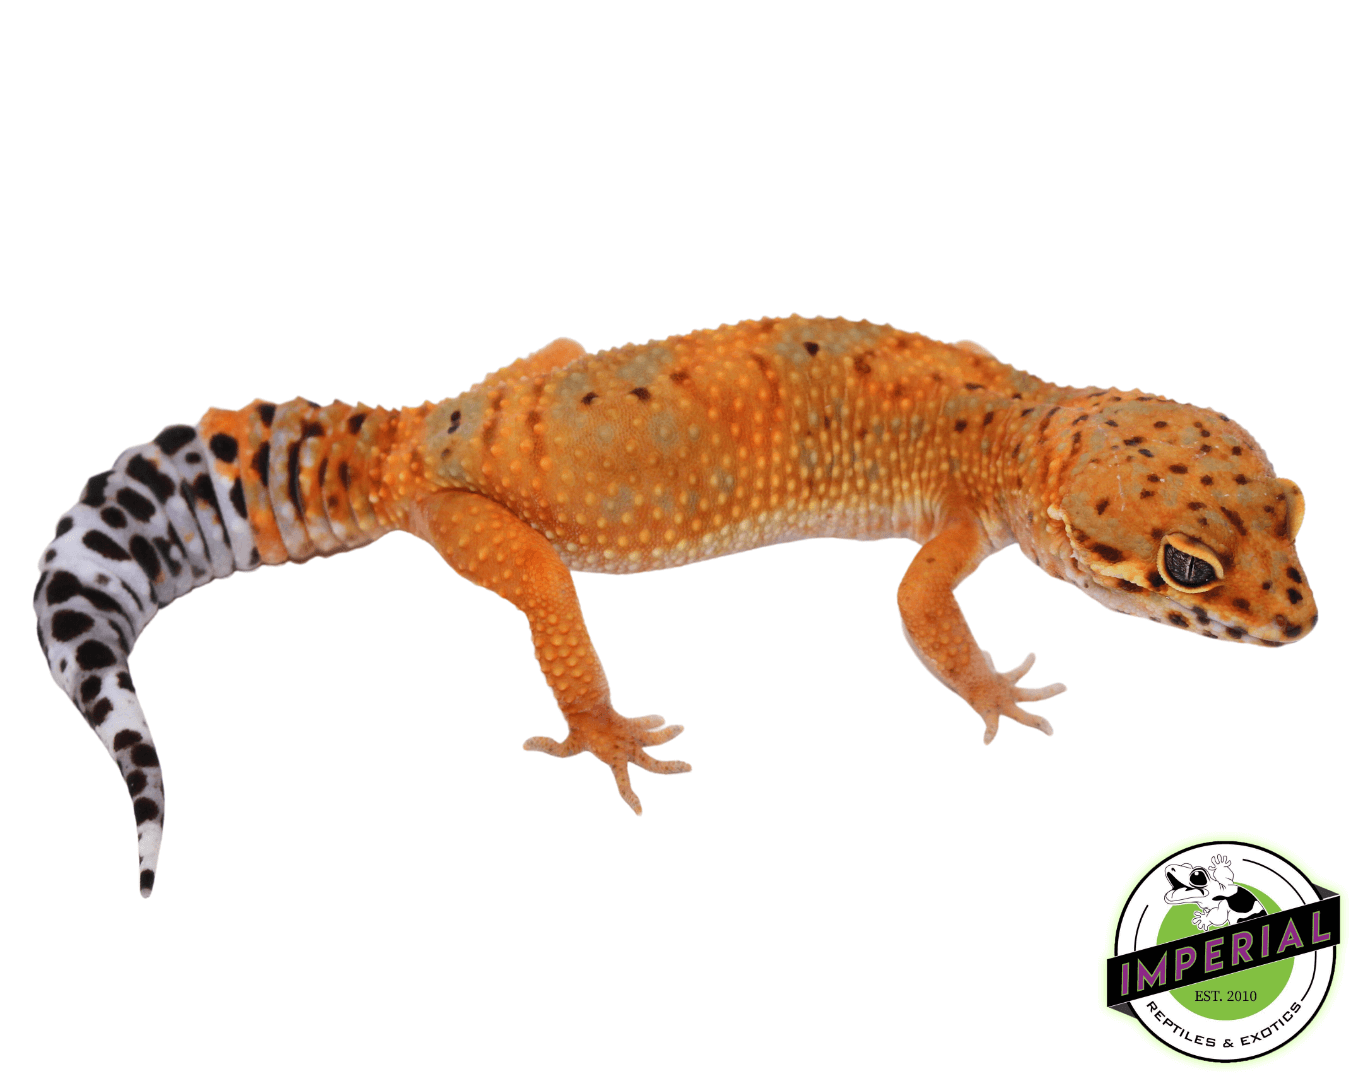 orange green tangerine leopard gecko for sale, buy reptiles online